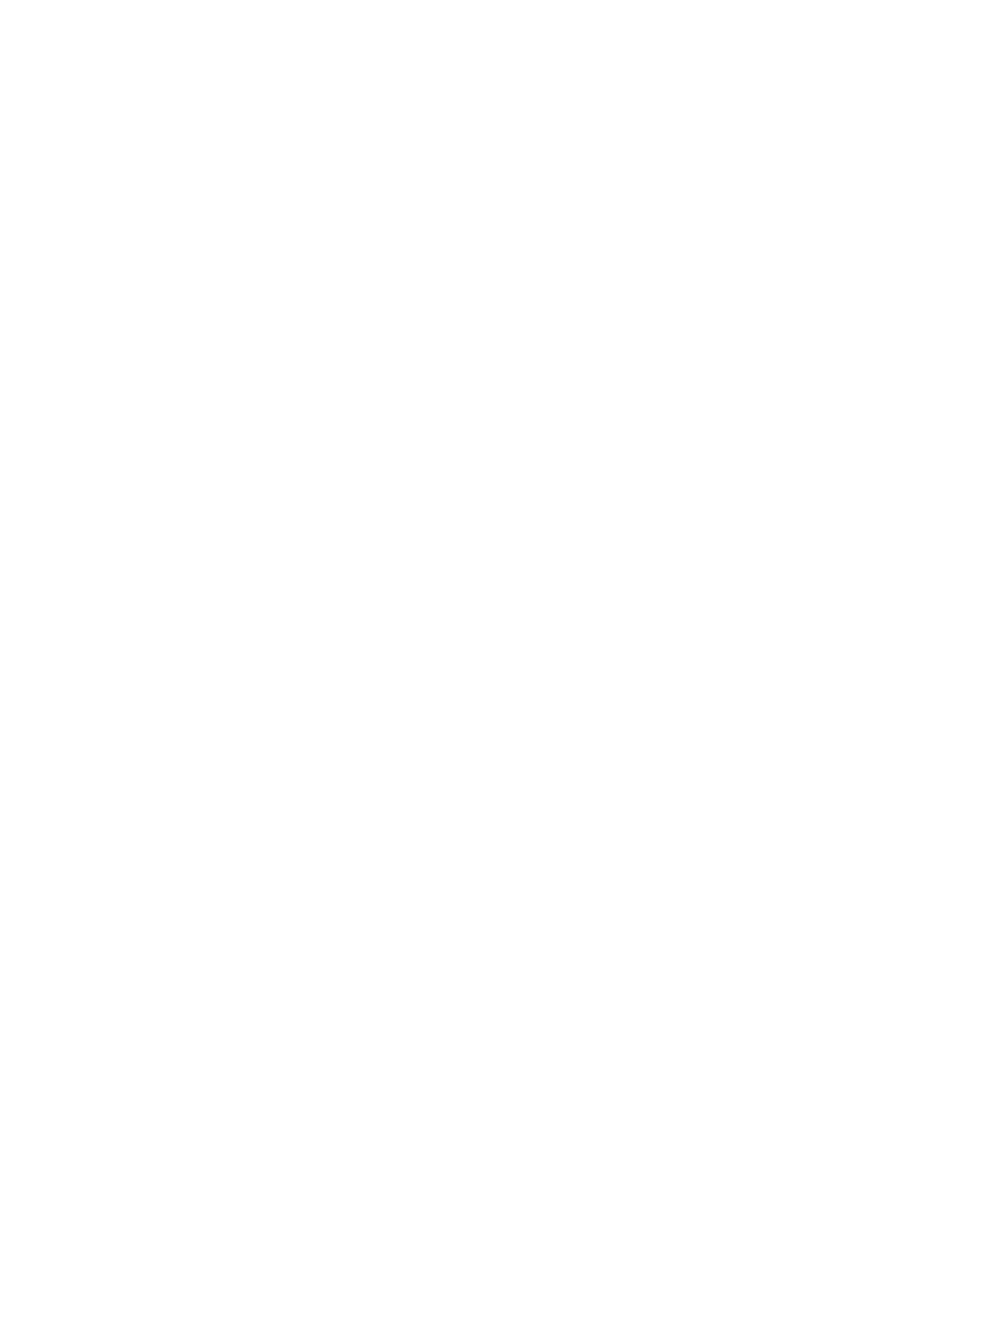 Sergio Mascheroni